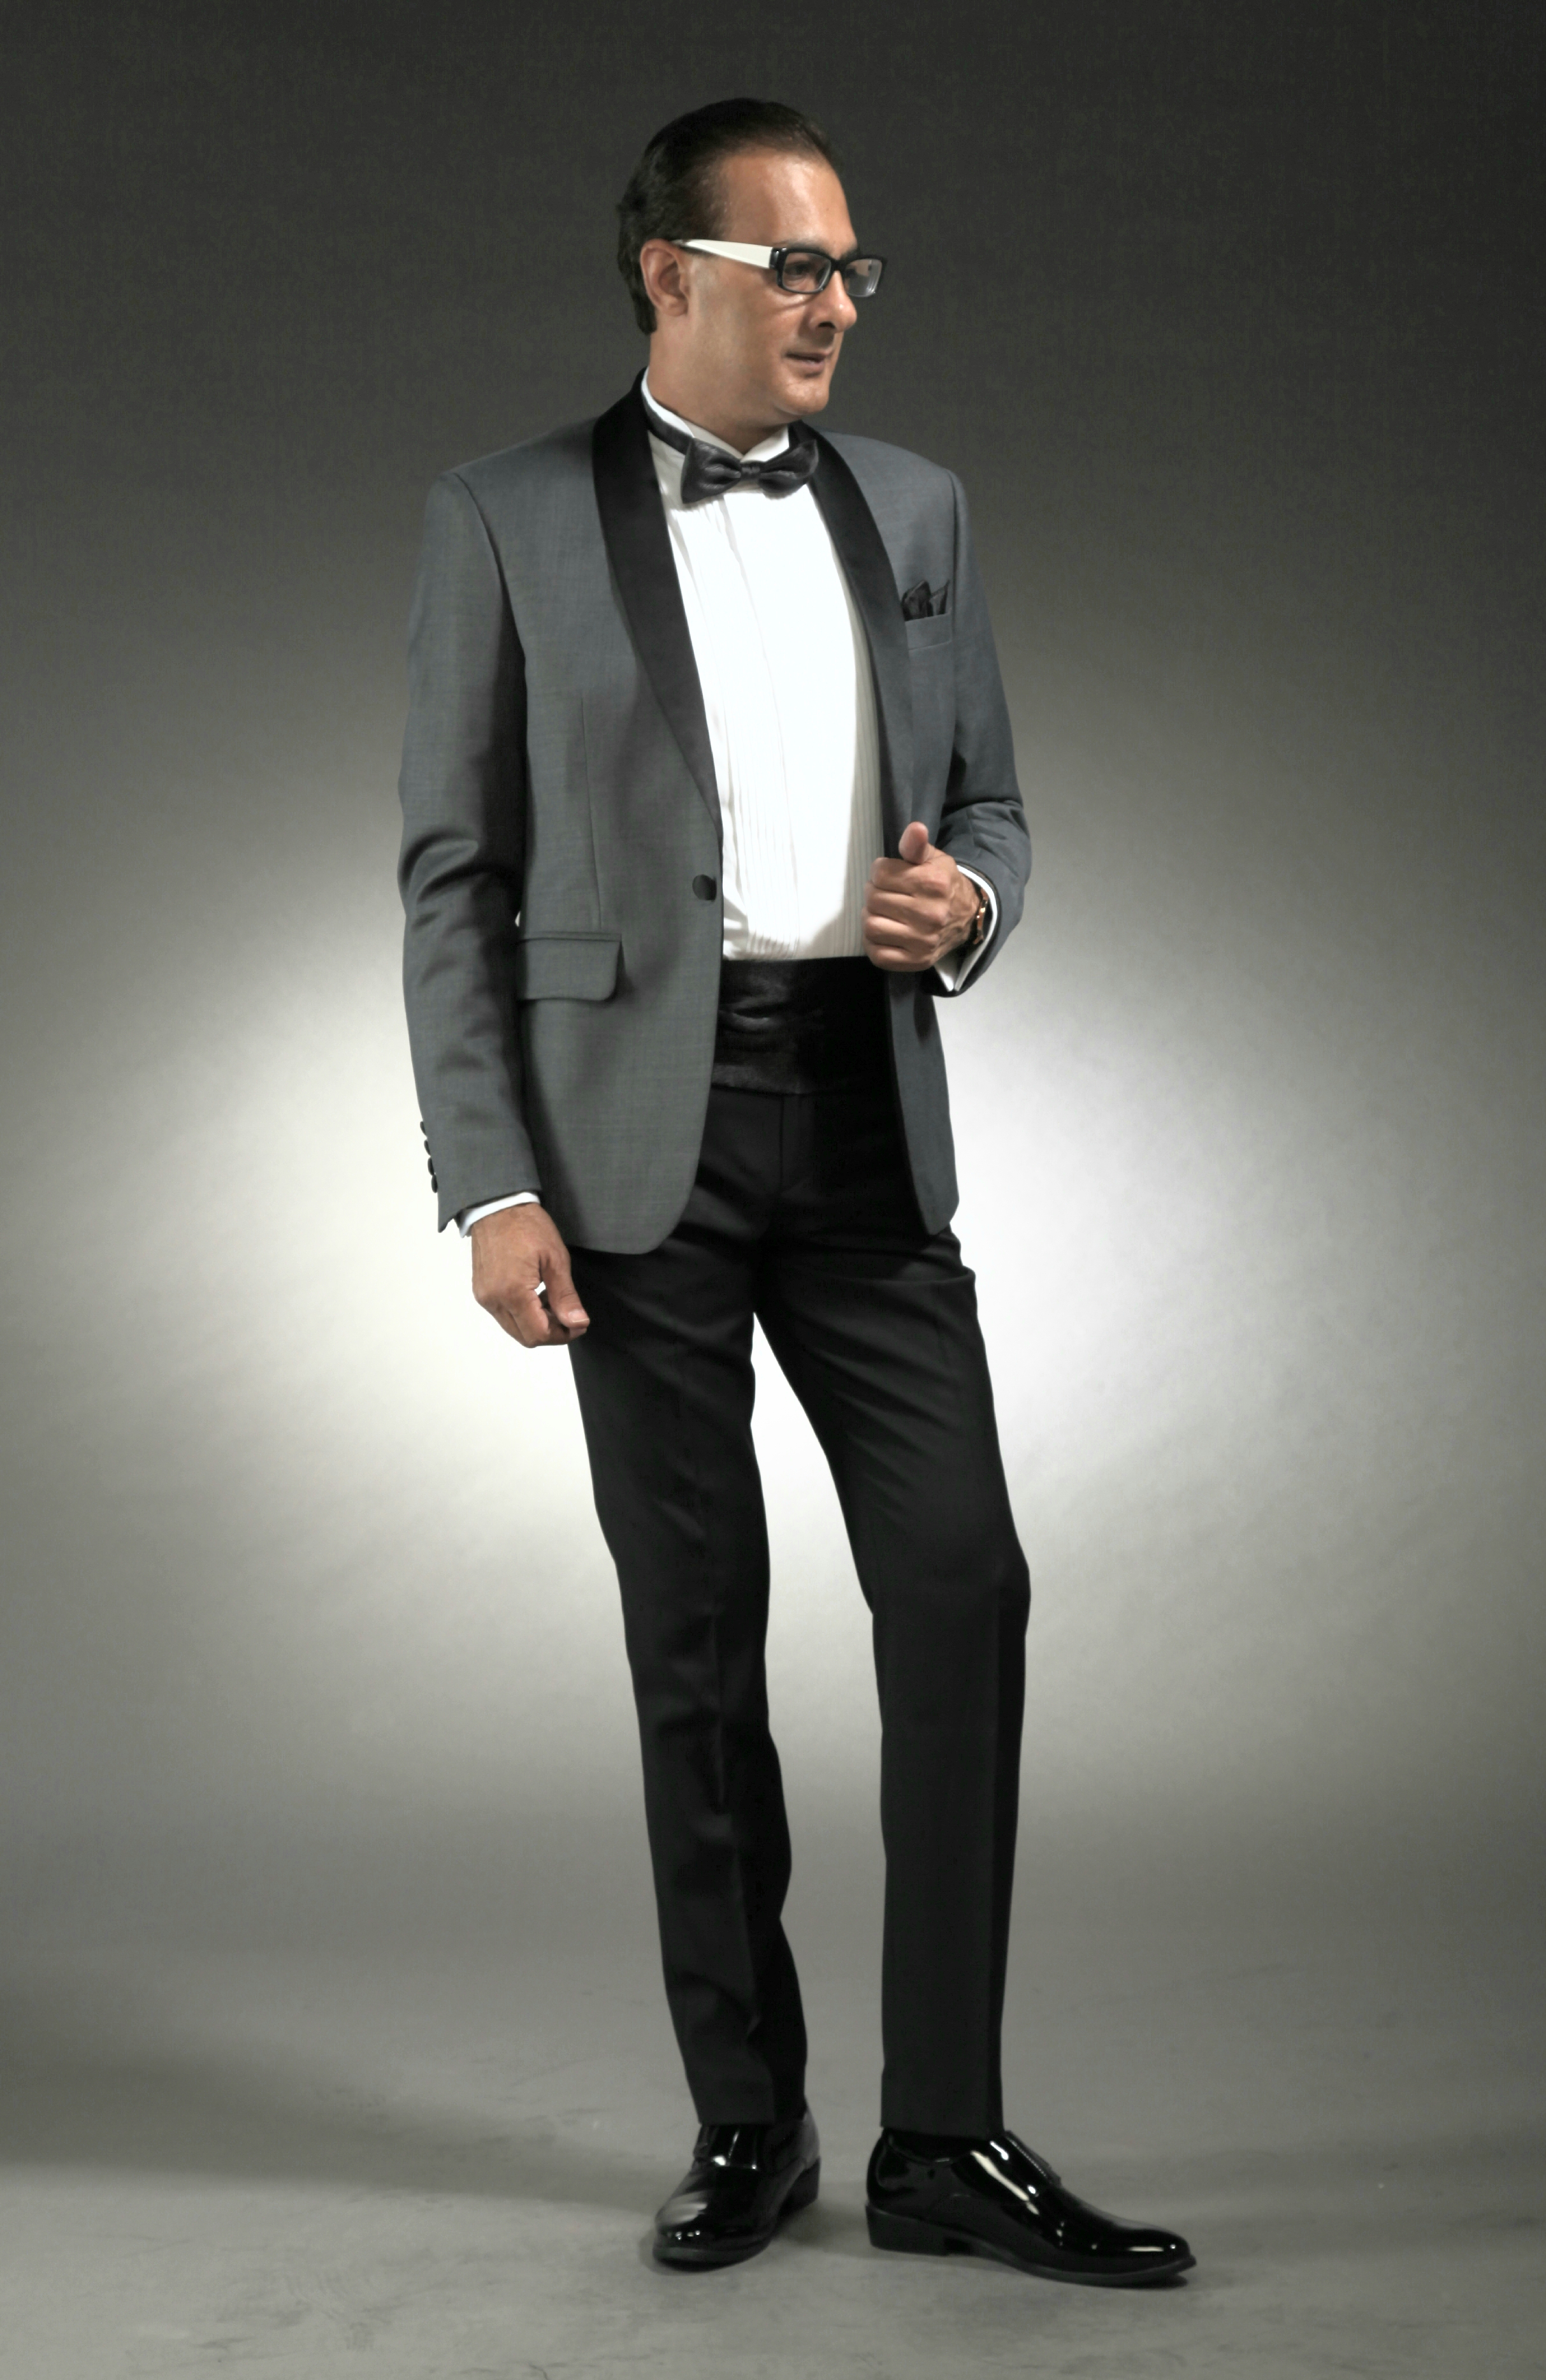 suit-rental-suits-rent-hire-designer-my-singapore-tailor-tailors-rentals-shop-tuxedo-black-tie-wedding-formal-05